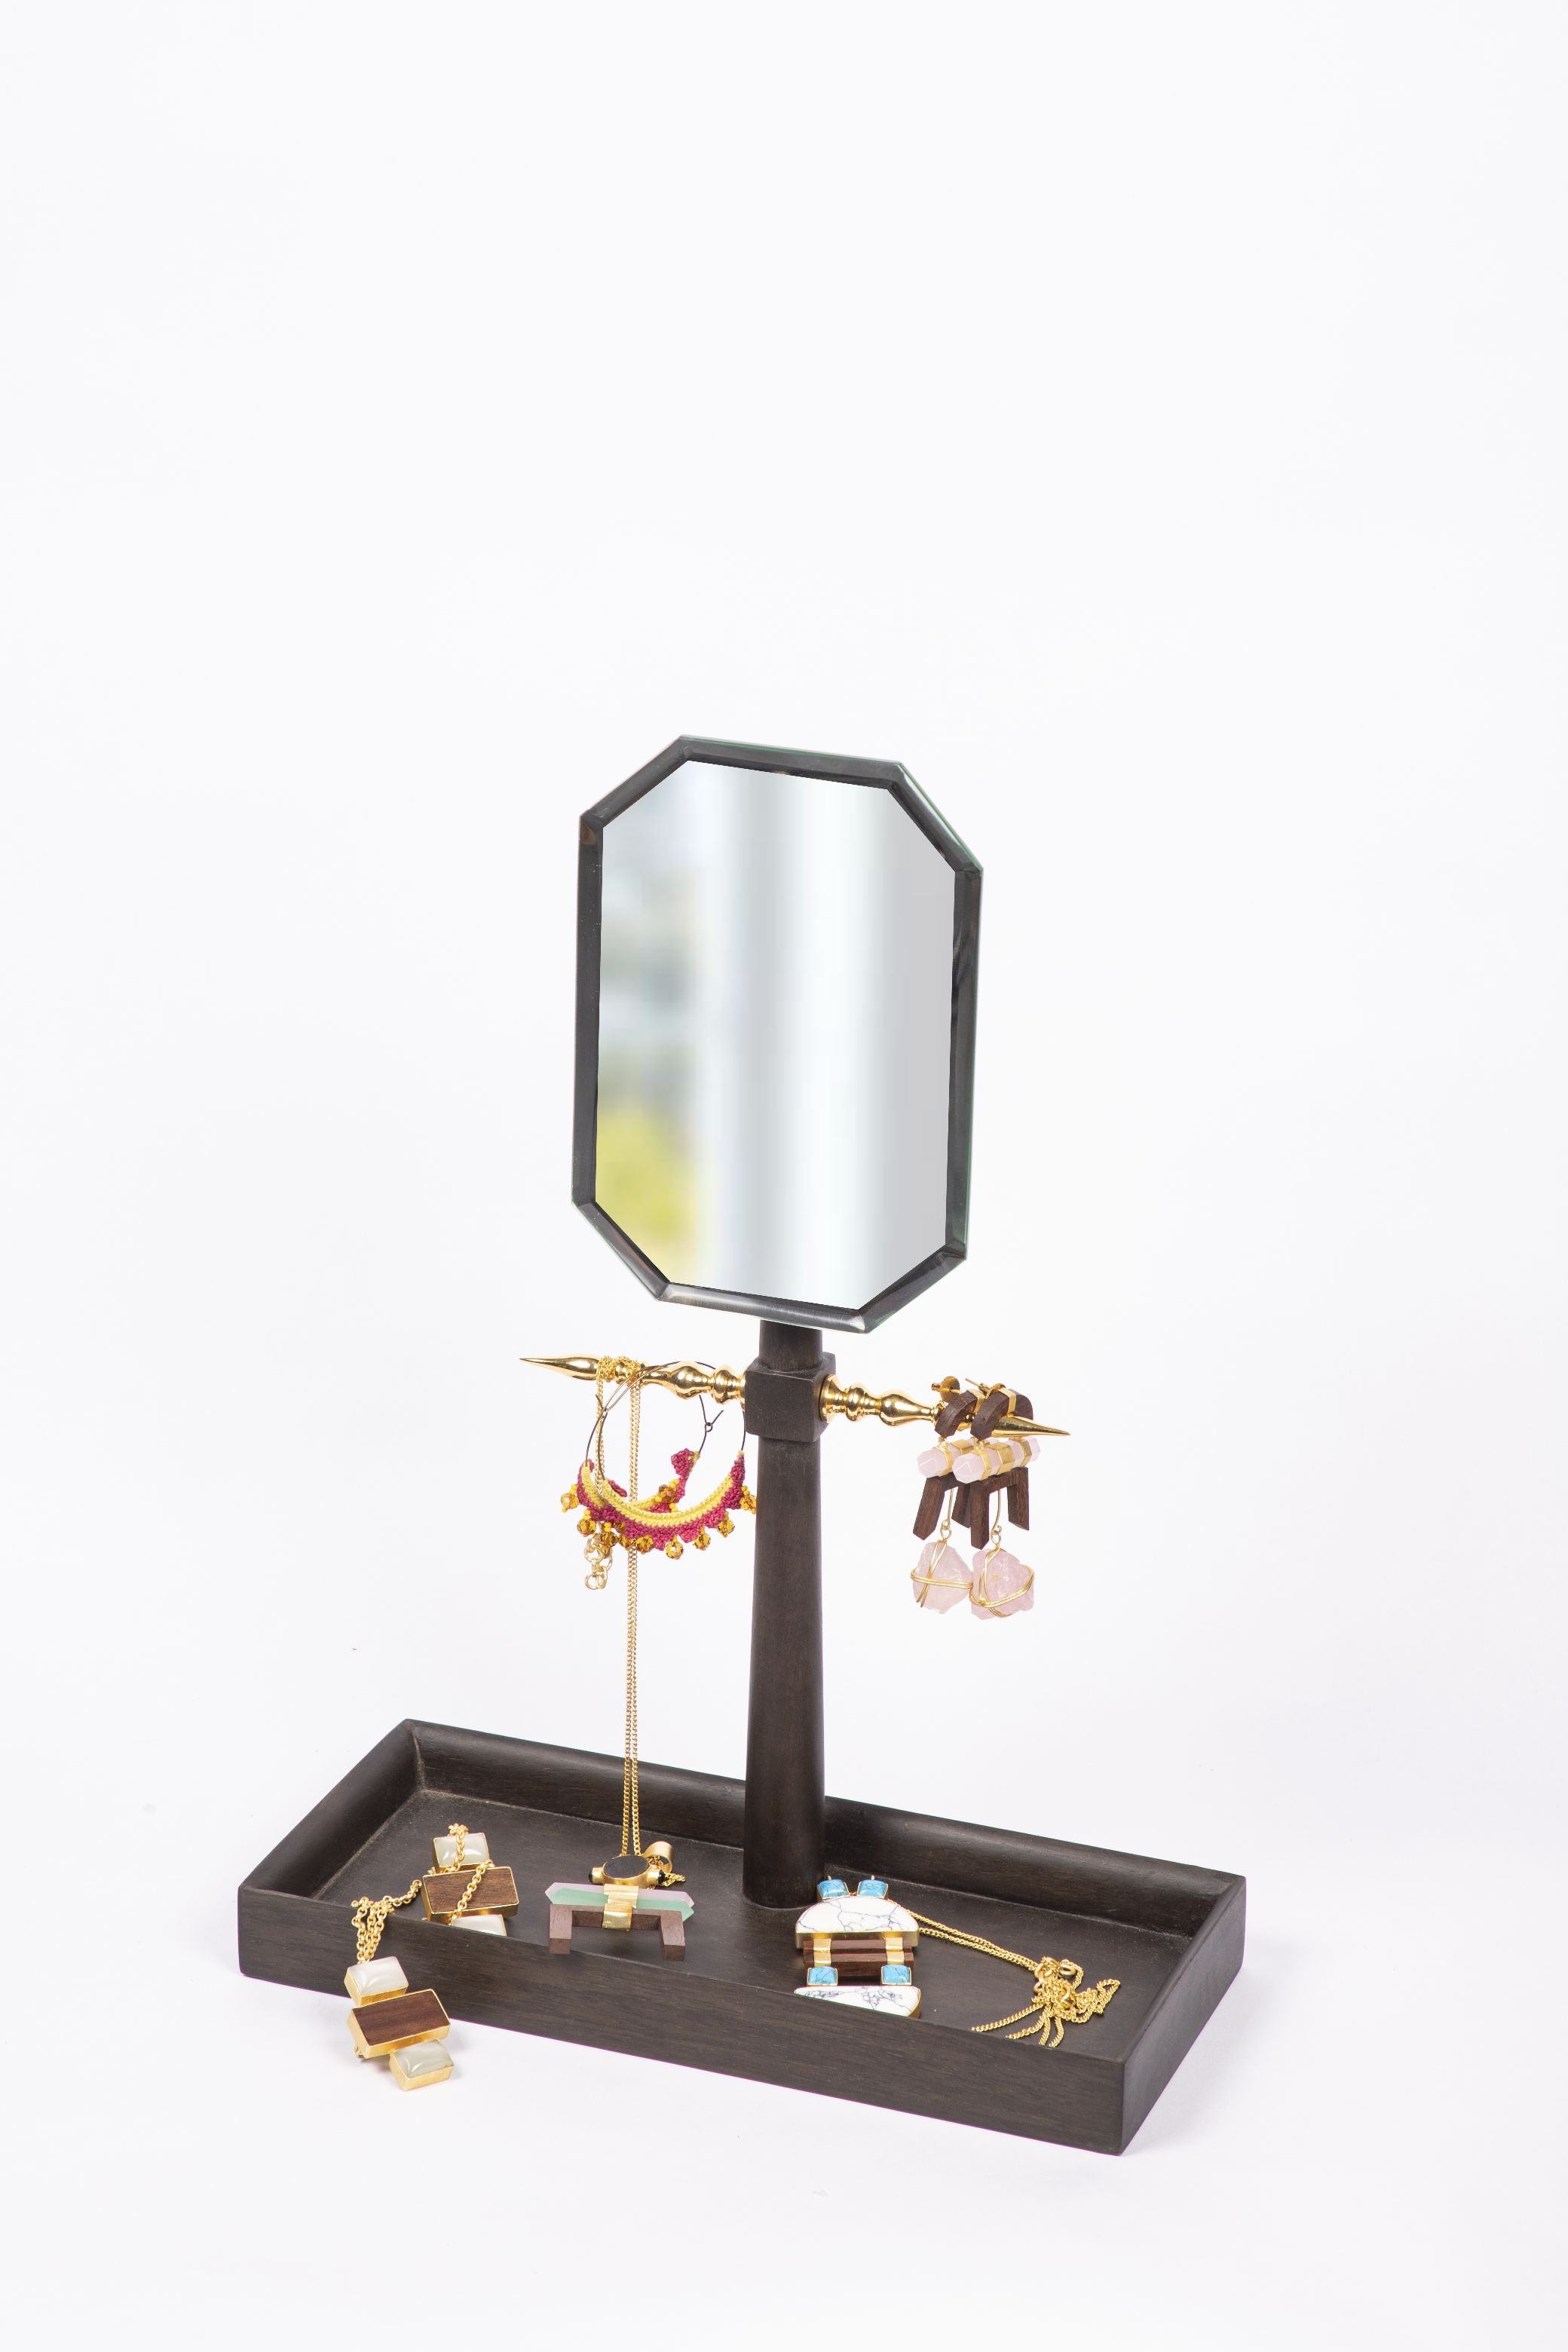 Mehr-un-Nissa Jewellery Stand Mango wood Brass Antique glass home decor table top organizer